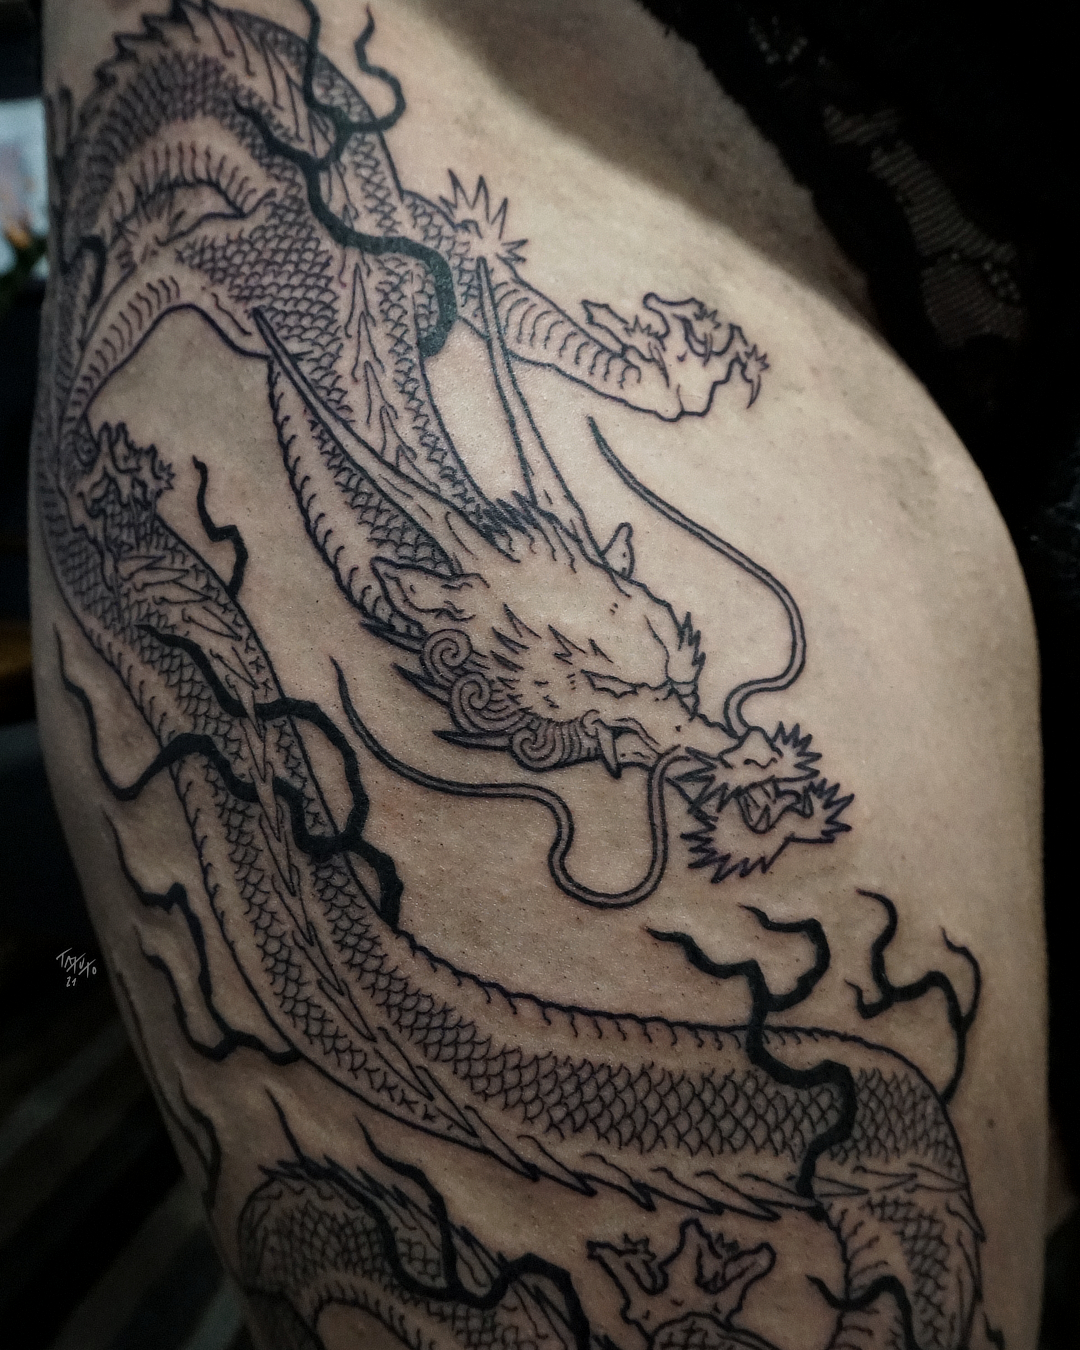 nico-tatuto-tatoueur-bordeaux-flash-tattoo-dragon-japonais-japanese-oriental-3